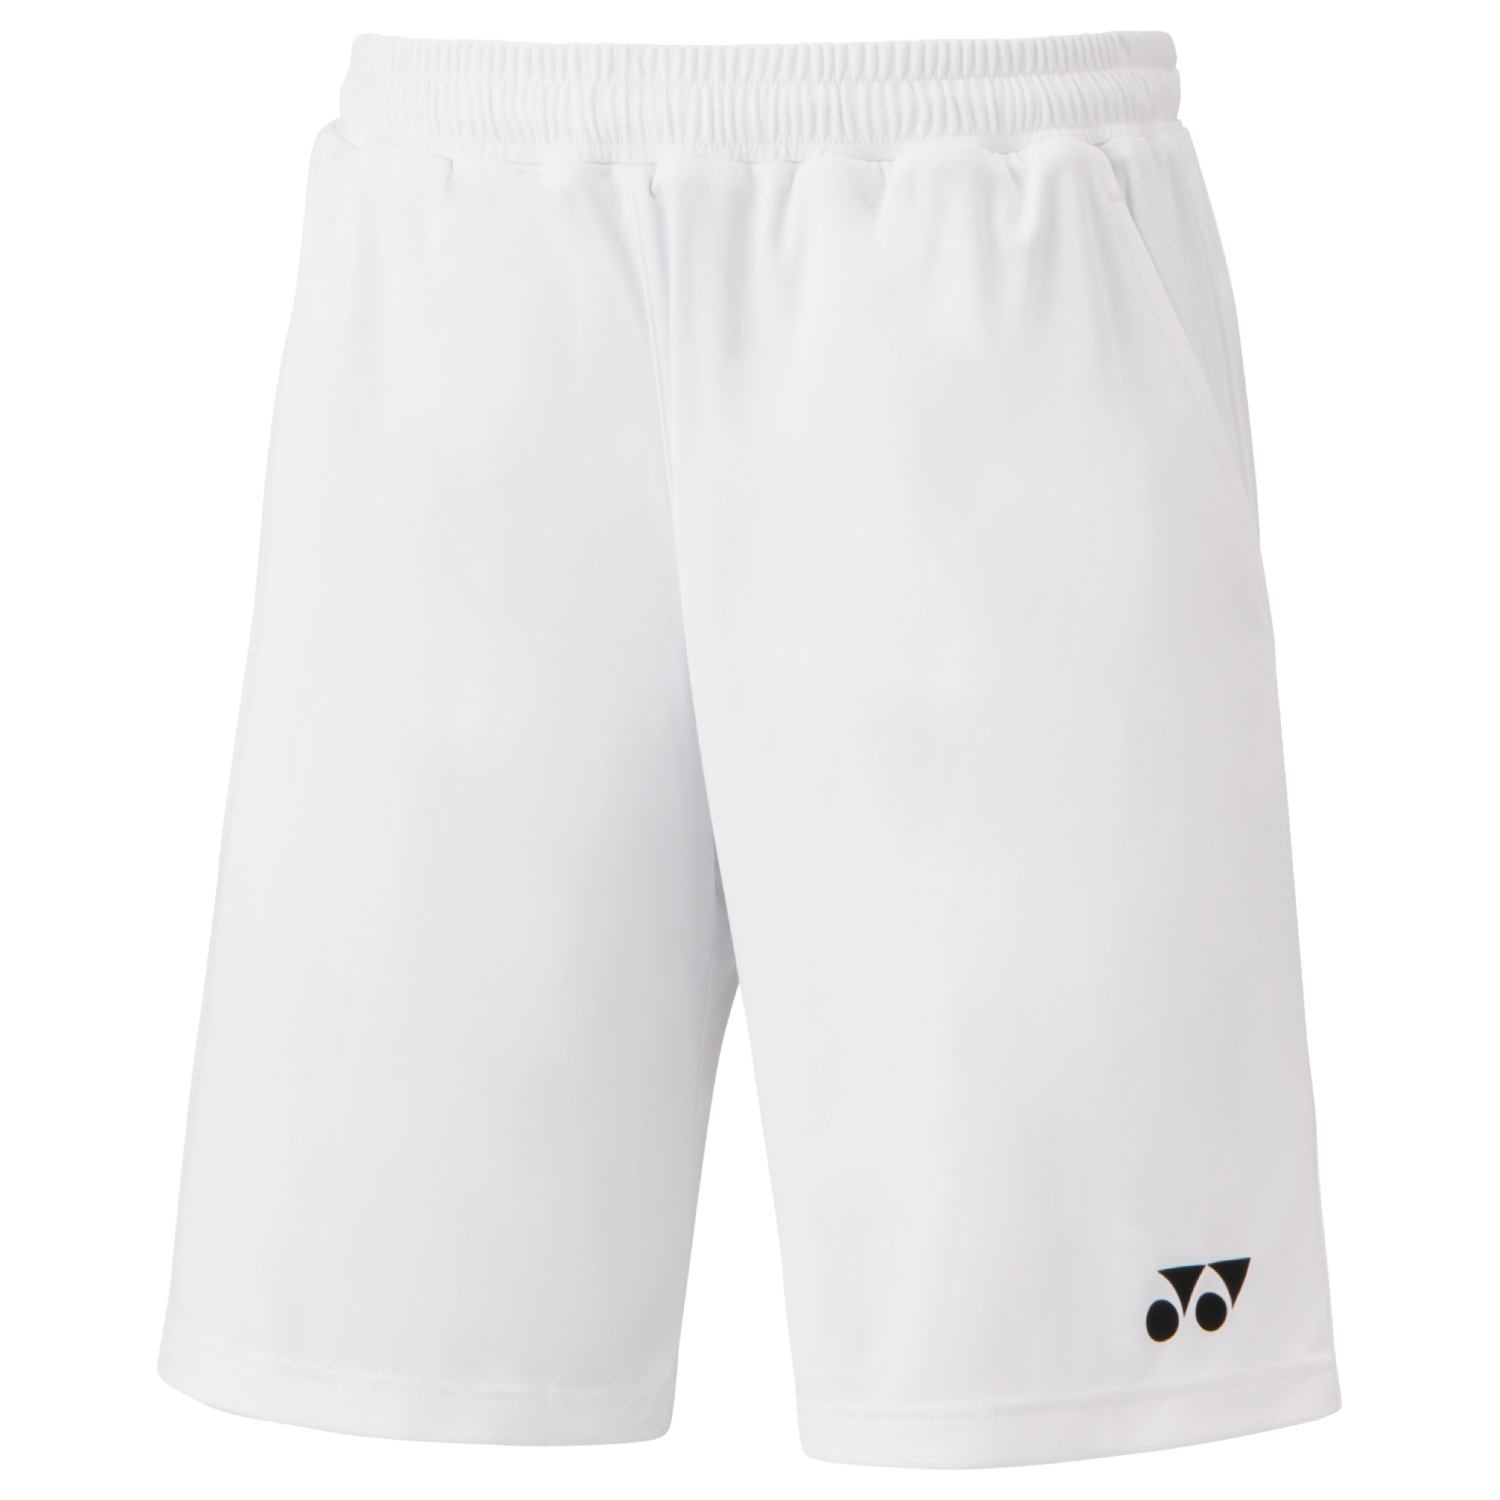 Yonex Shorts Junior White